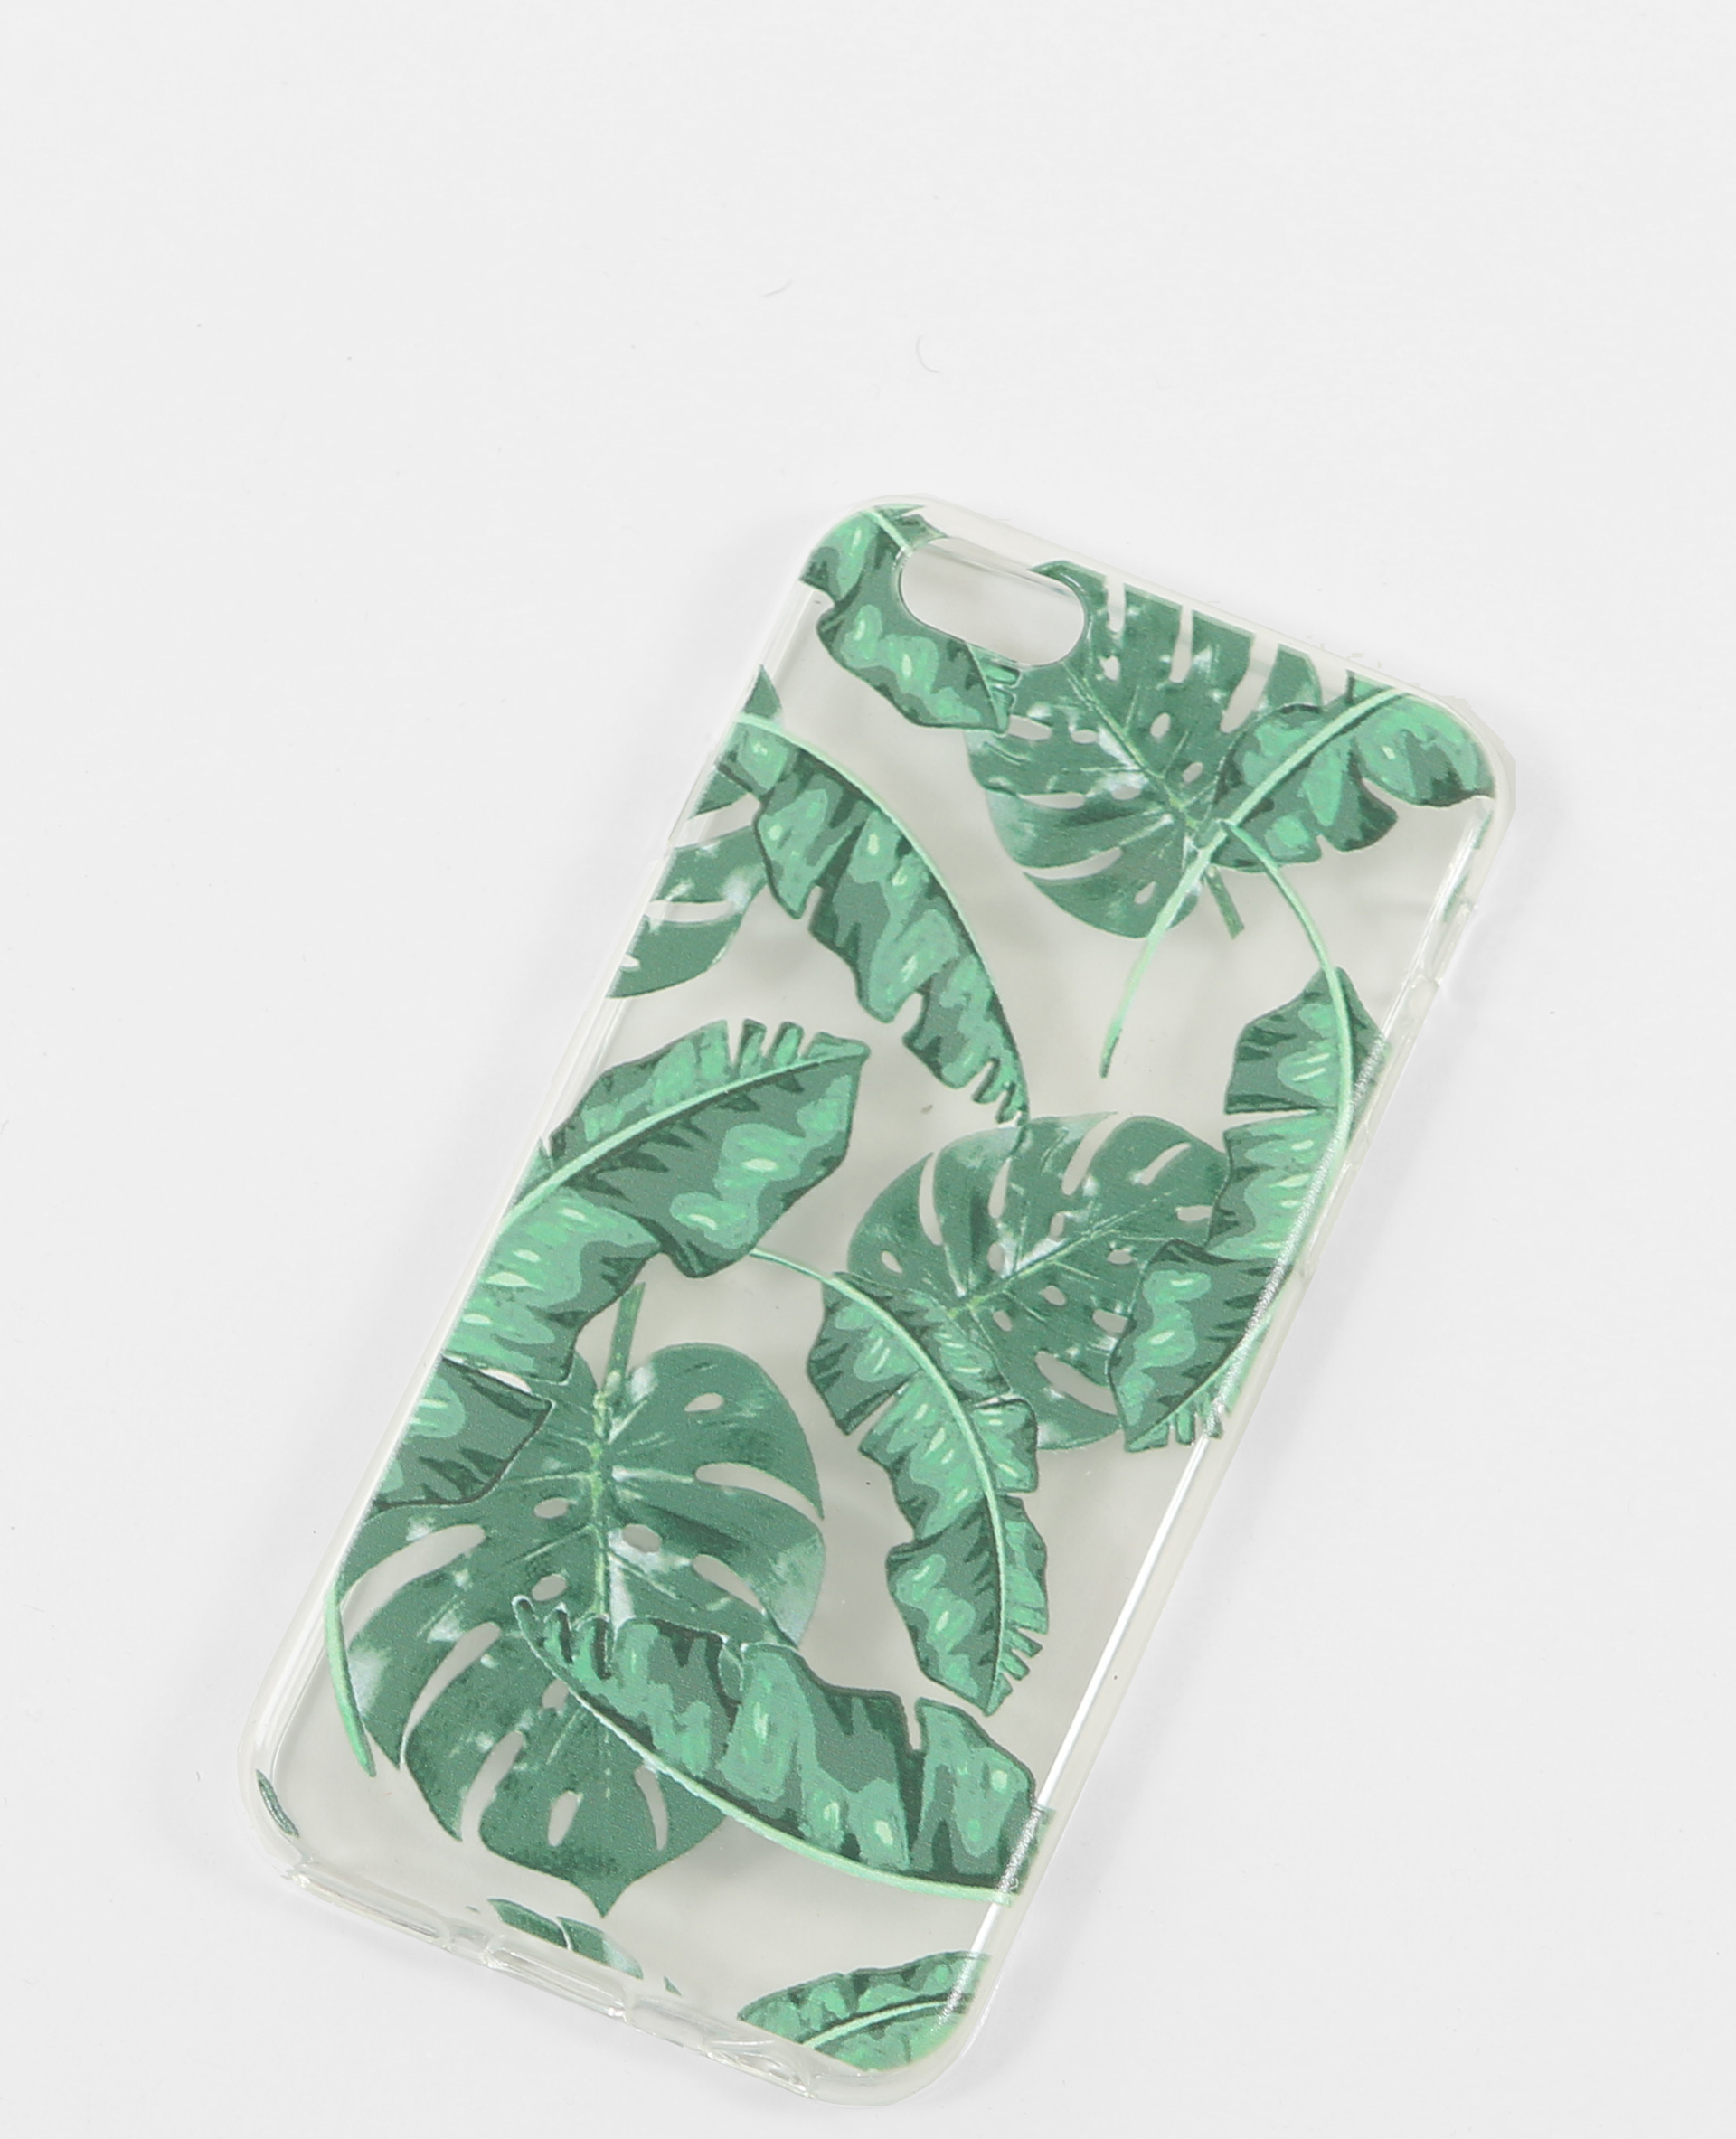 Coque compatible iPhone 6 palmiers vert - Pimkie